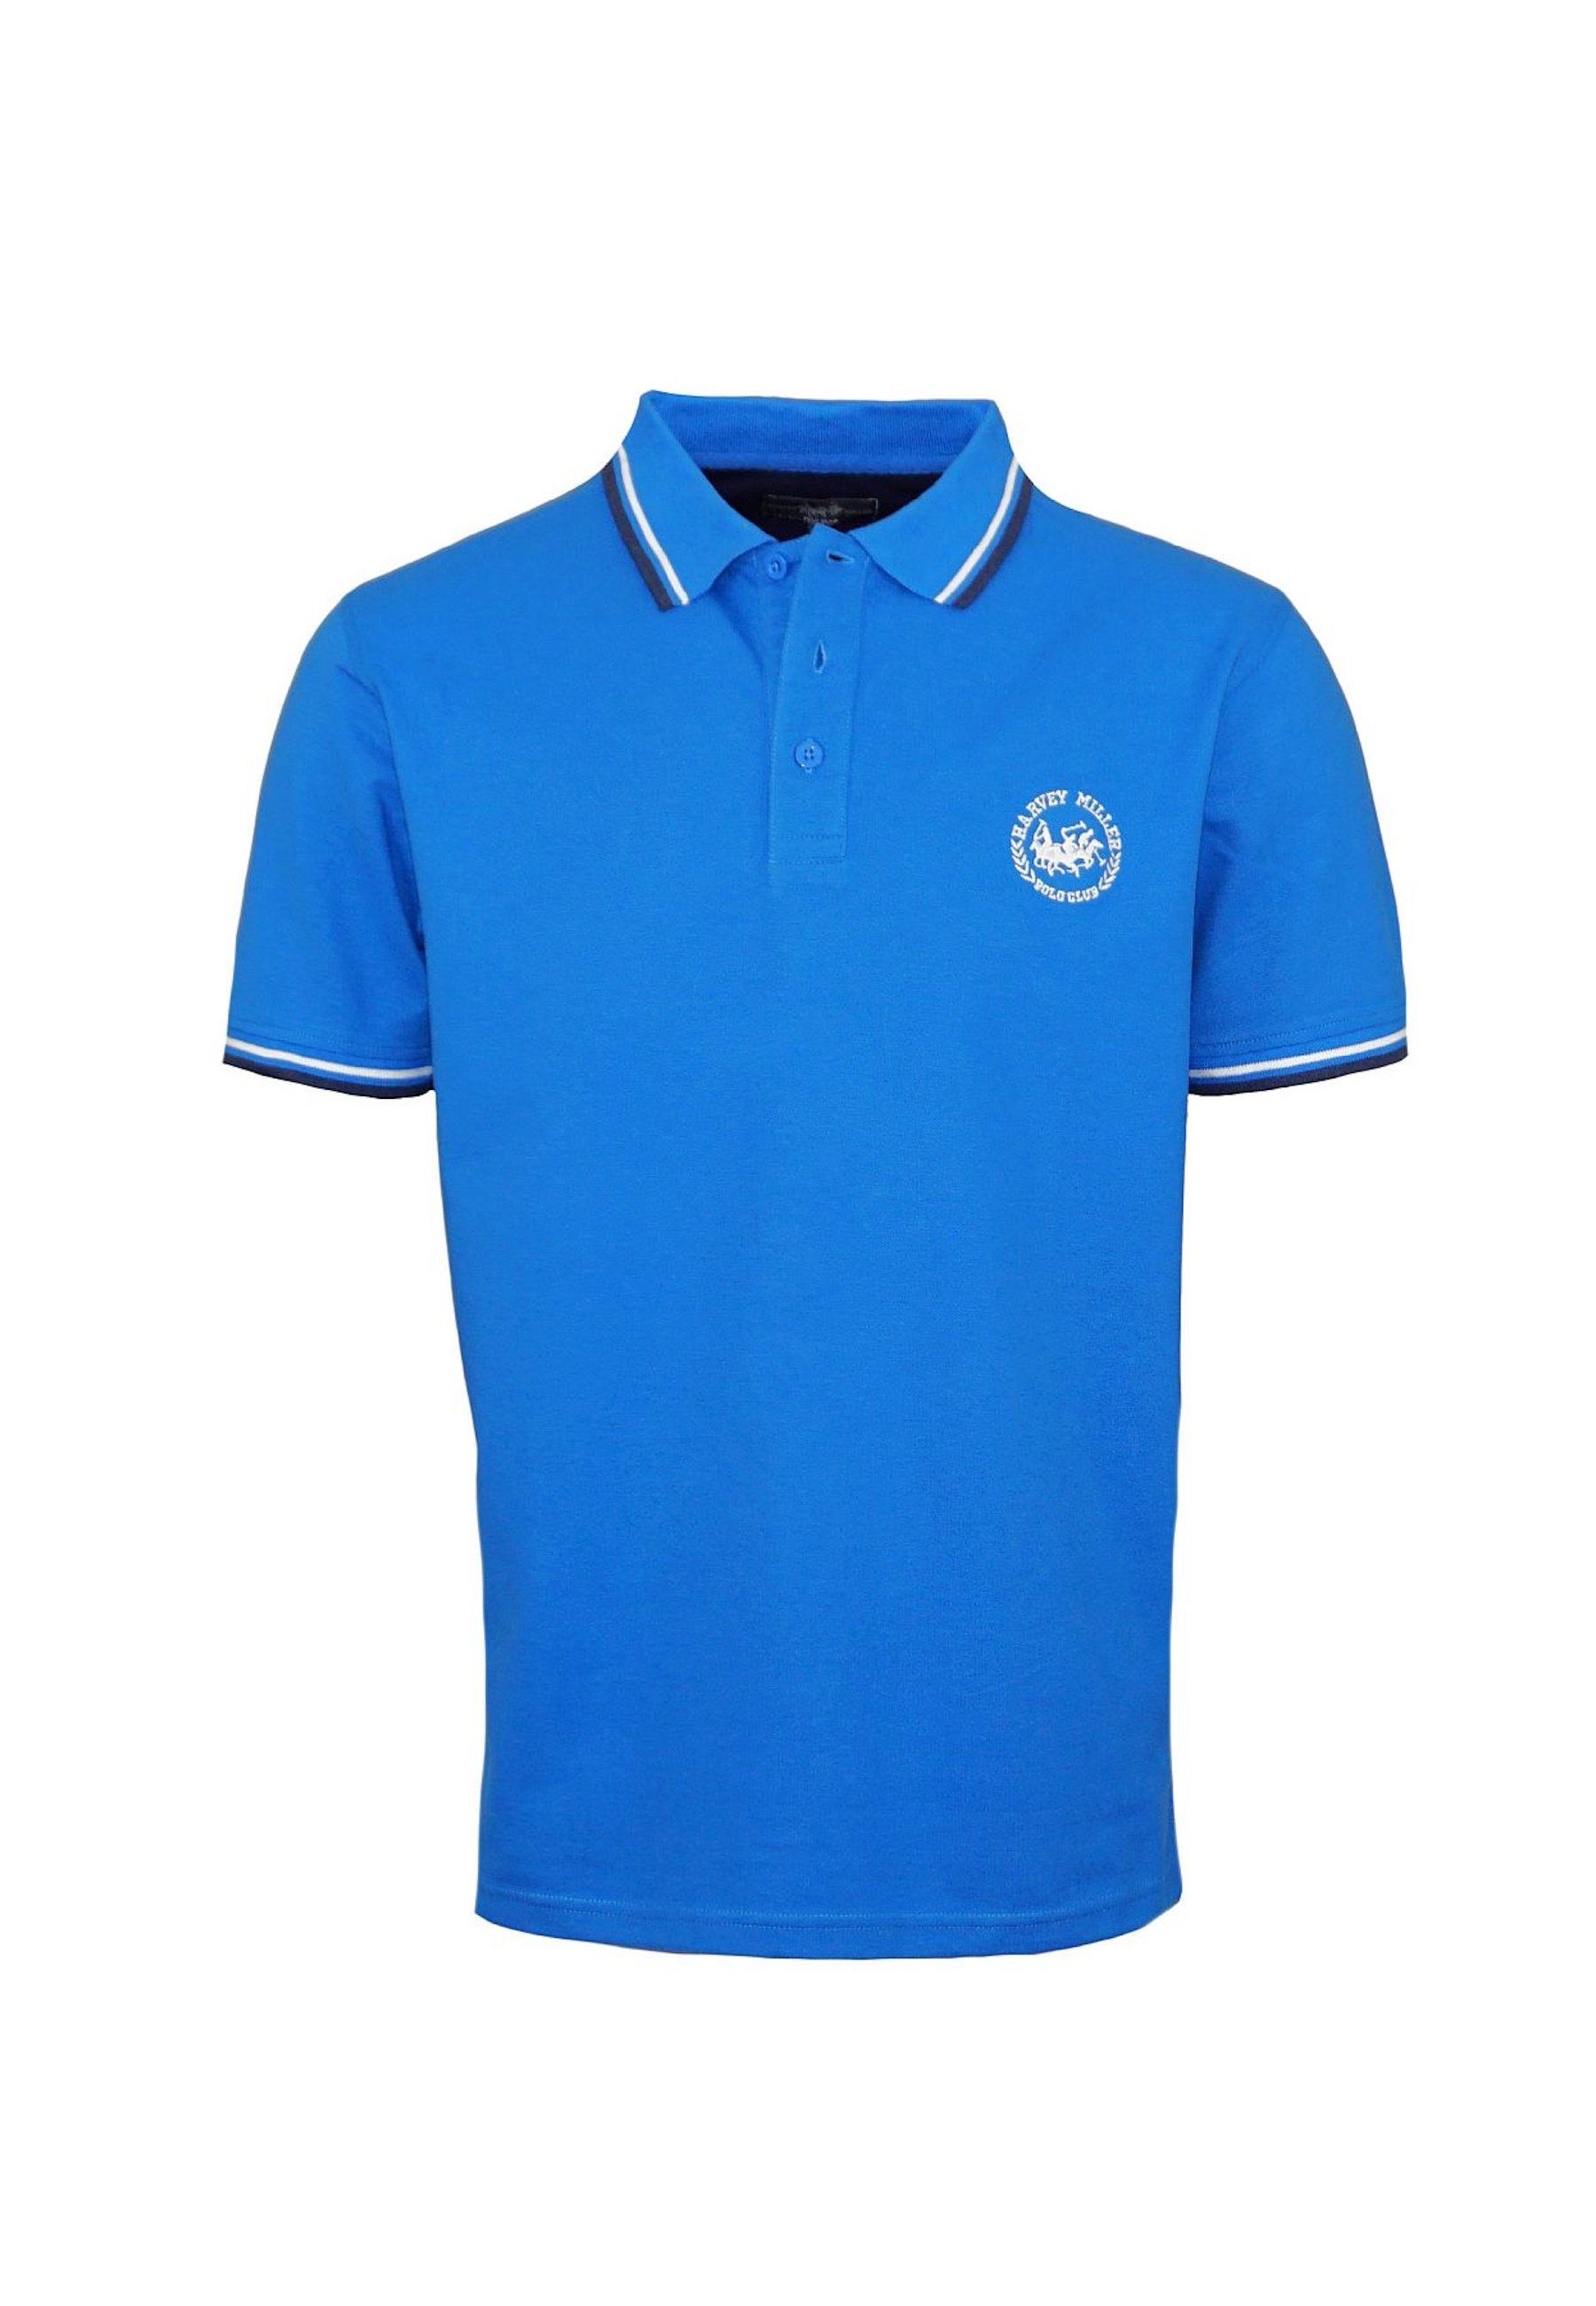 Harvey Miller Poloshirt Polo Poloshirt Fashion Polohemd Kurzarm Shirt blau